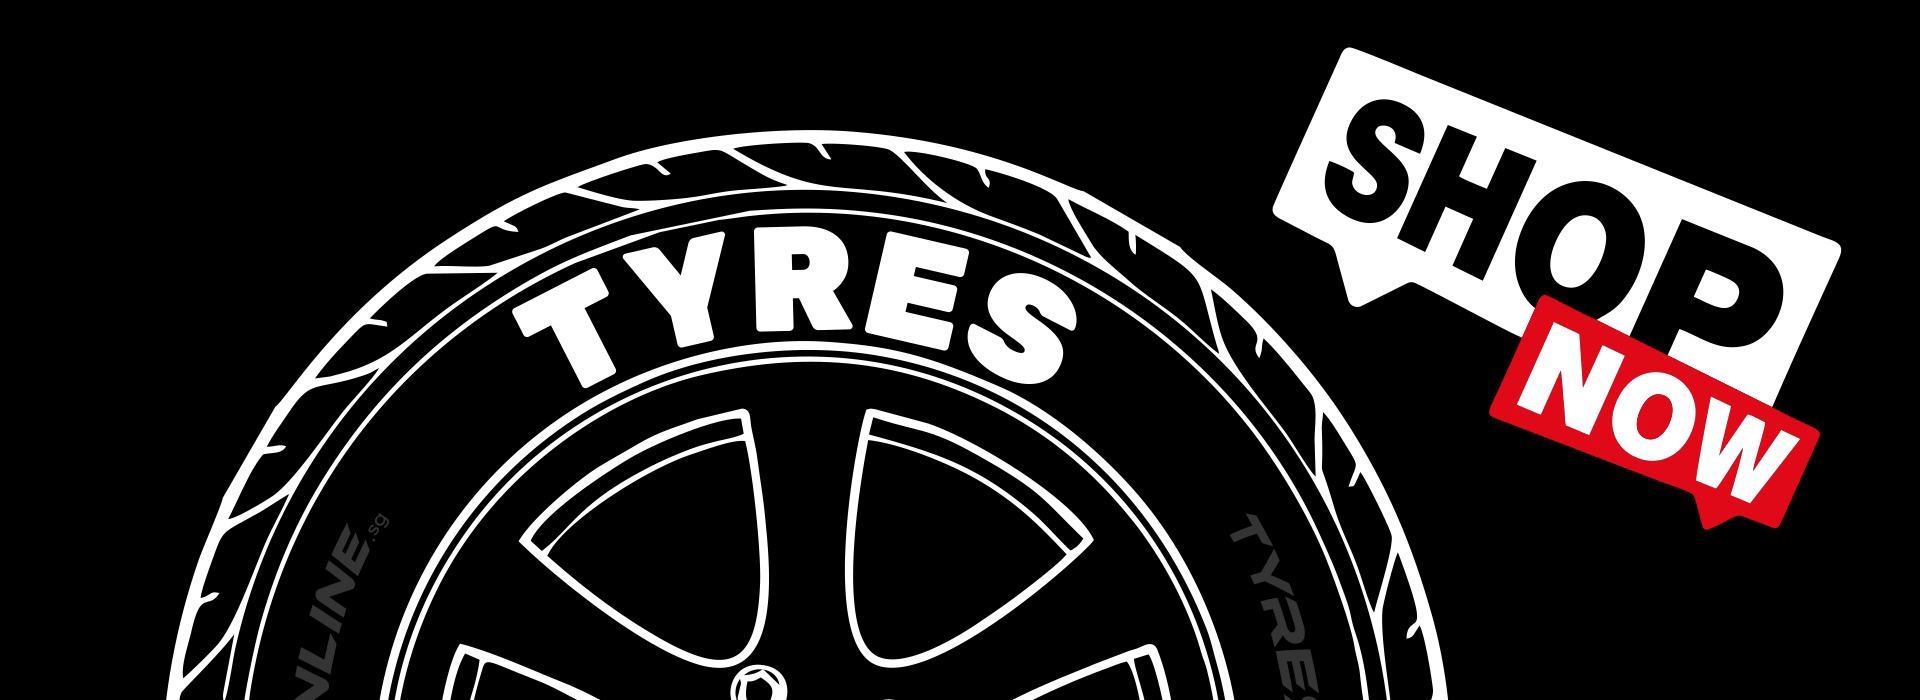 2021 Tyres